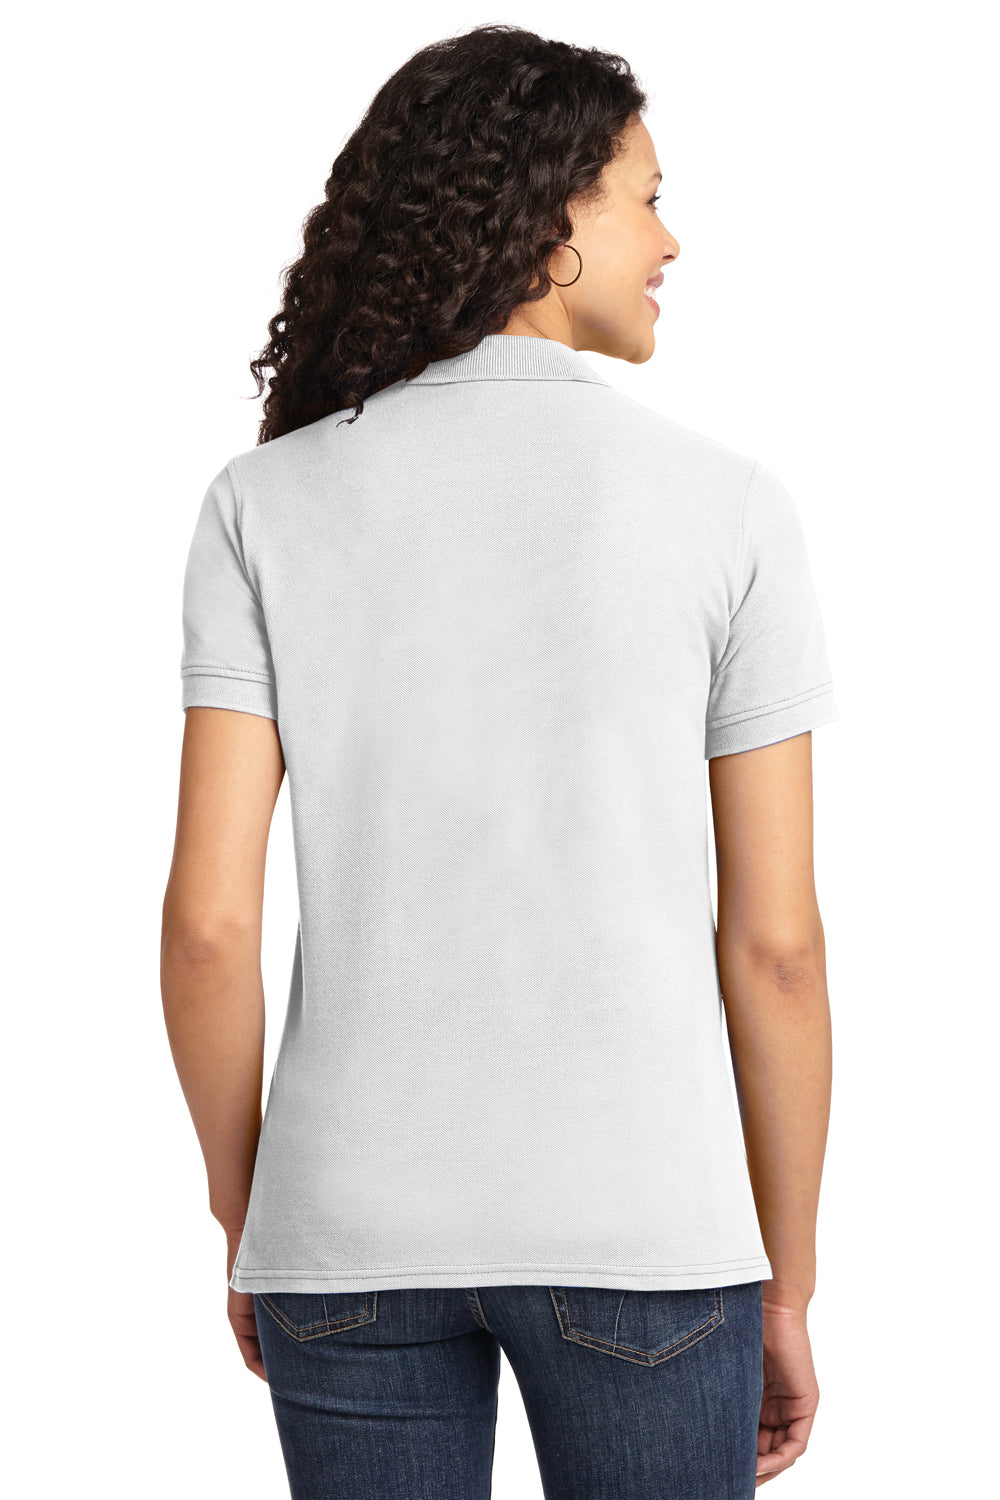 Port & Company LKP155 Womens Core Stain Resistant Short Sleeve Polo Shirt White Back